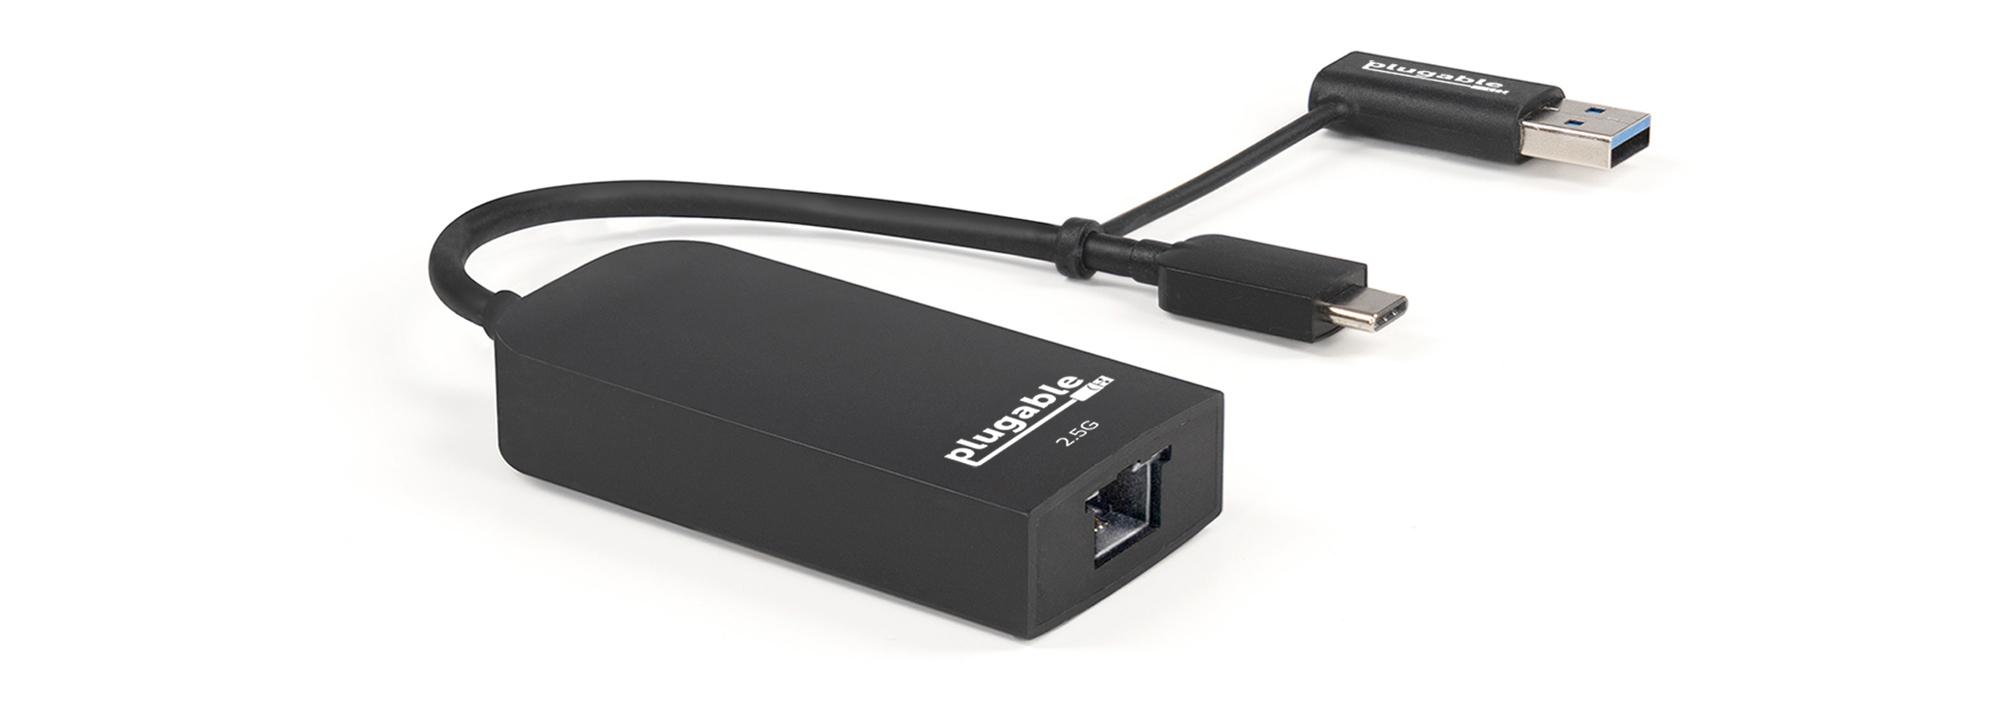 USB 2.0 to 10/100/1000 Gigabit Ethernet Plugable Network Adapter